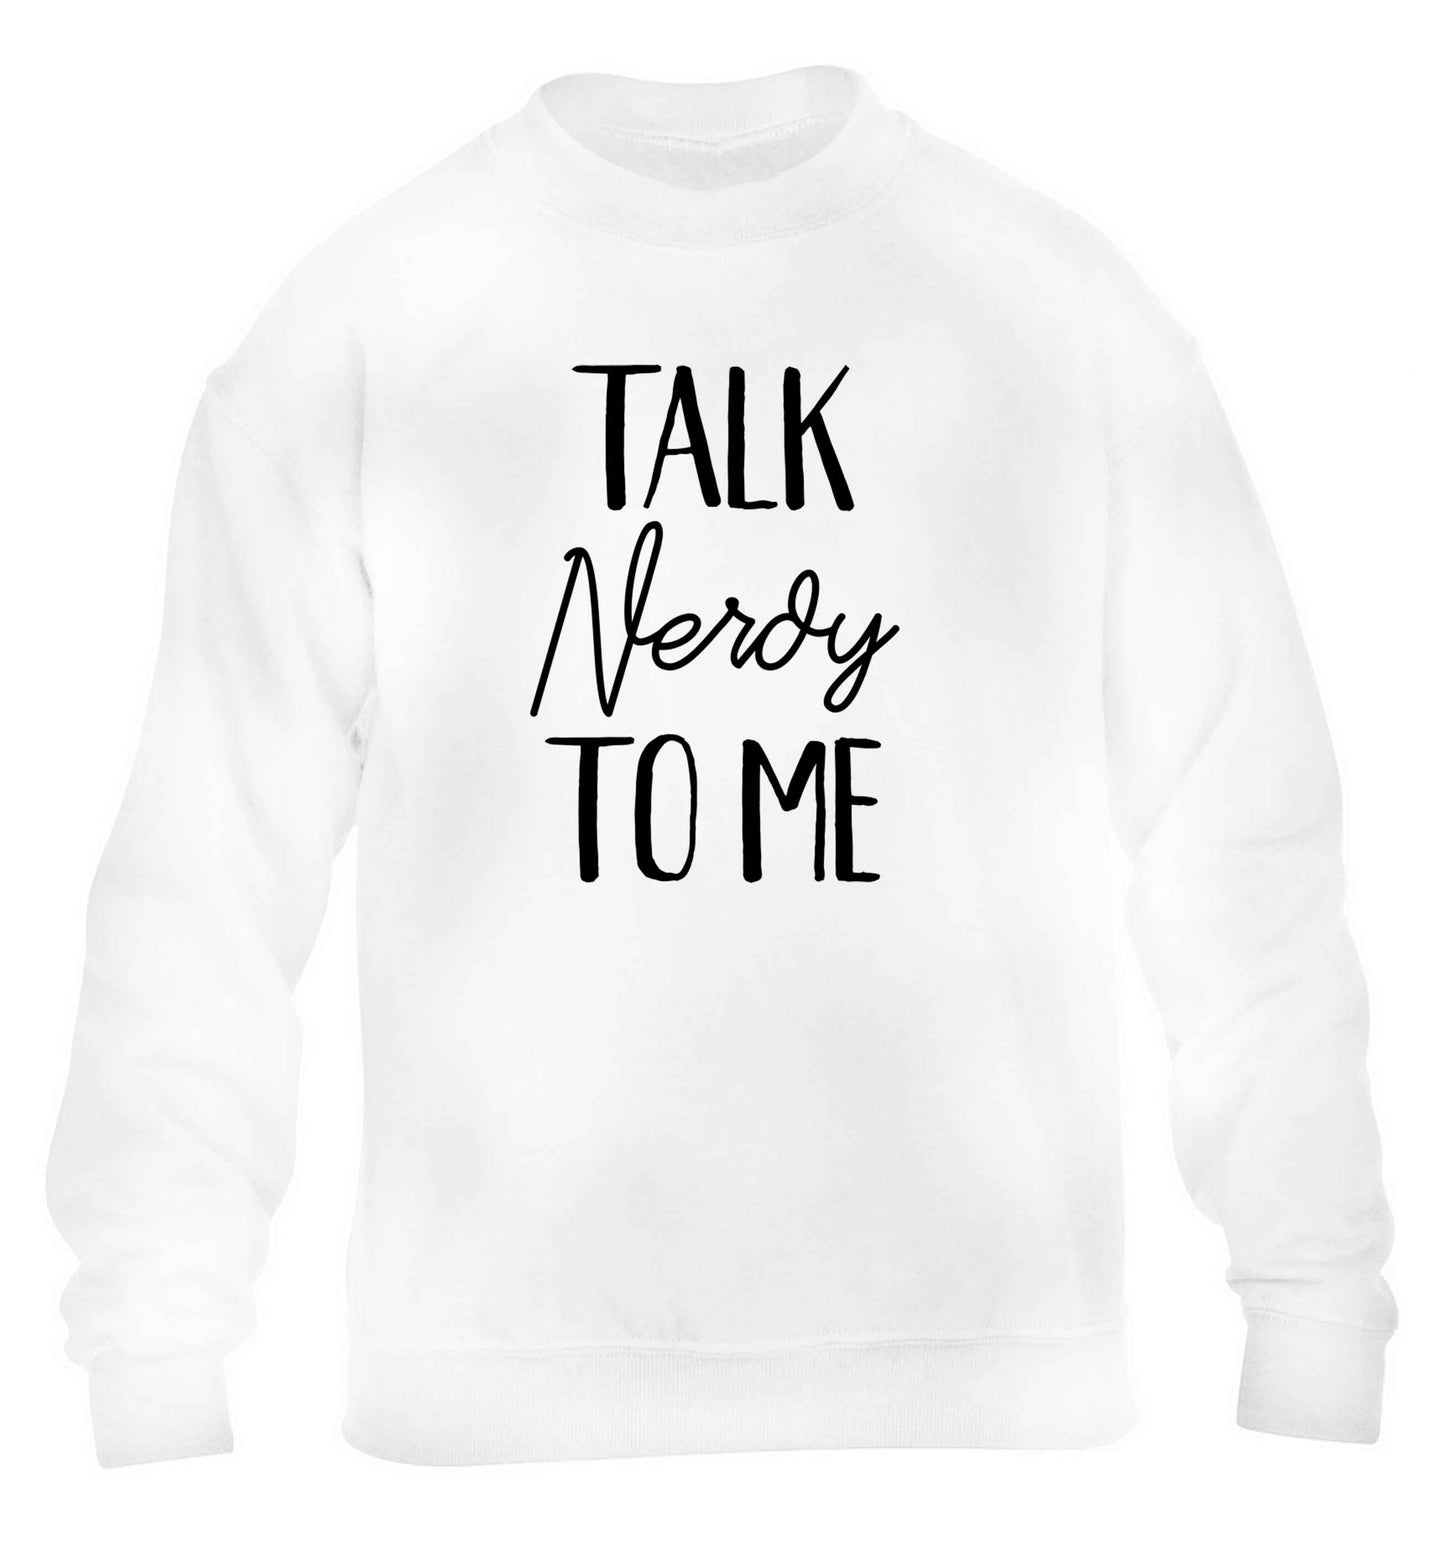 Talk nerdy to me children's white sweater 12-13 Years